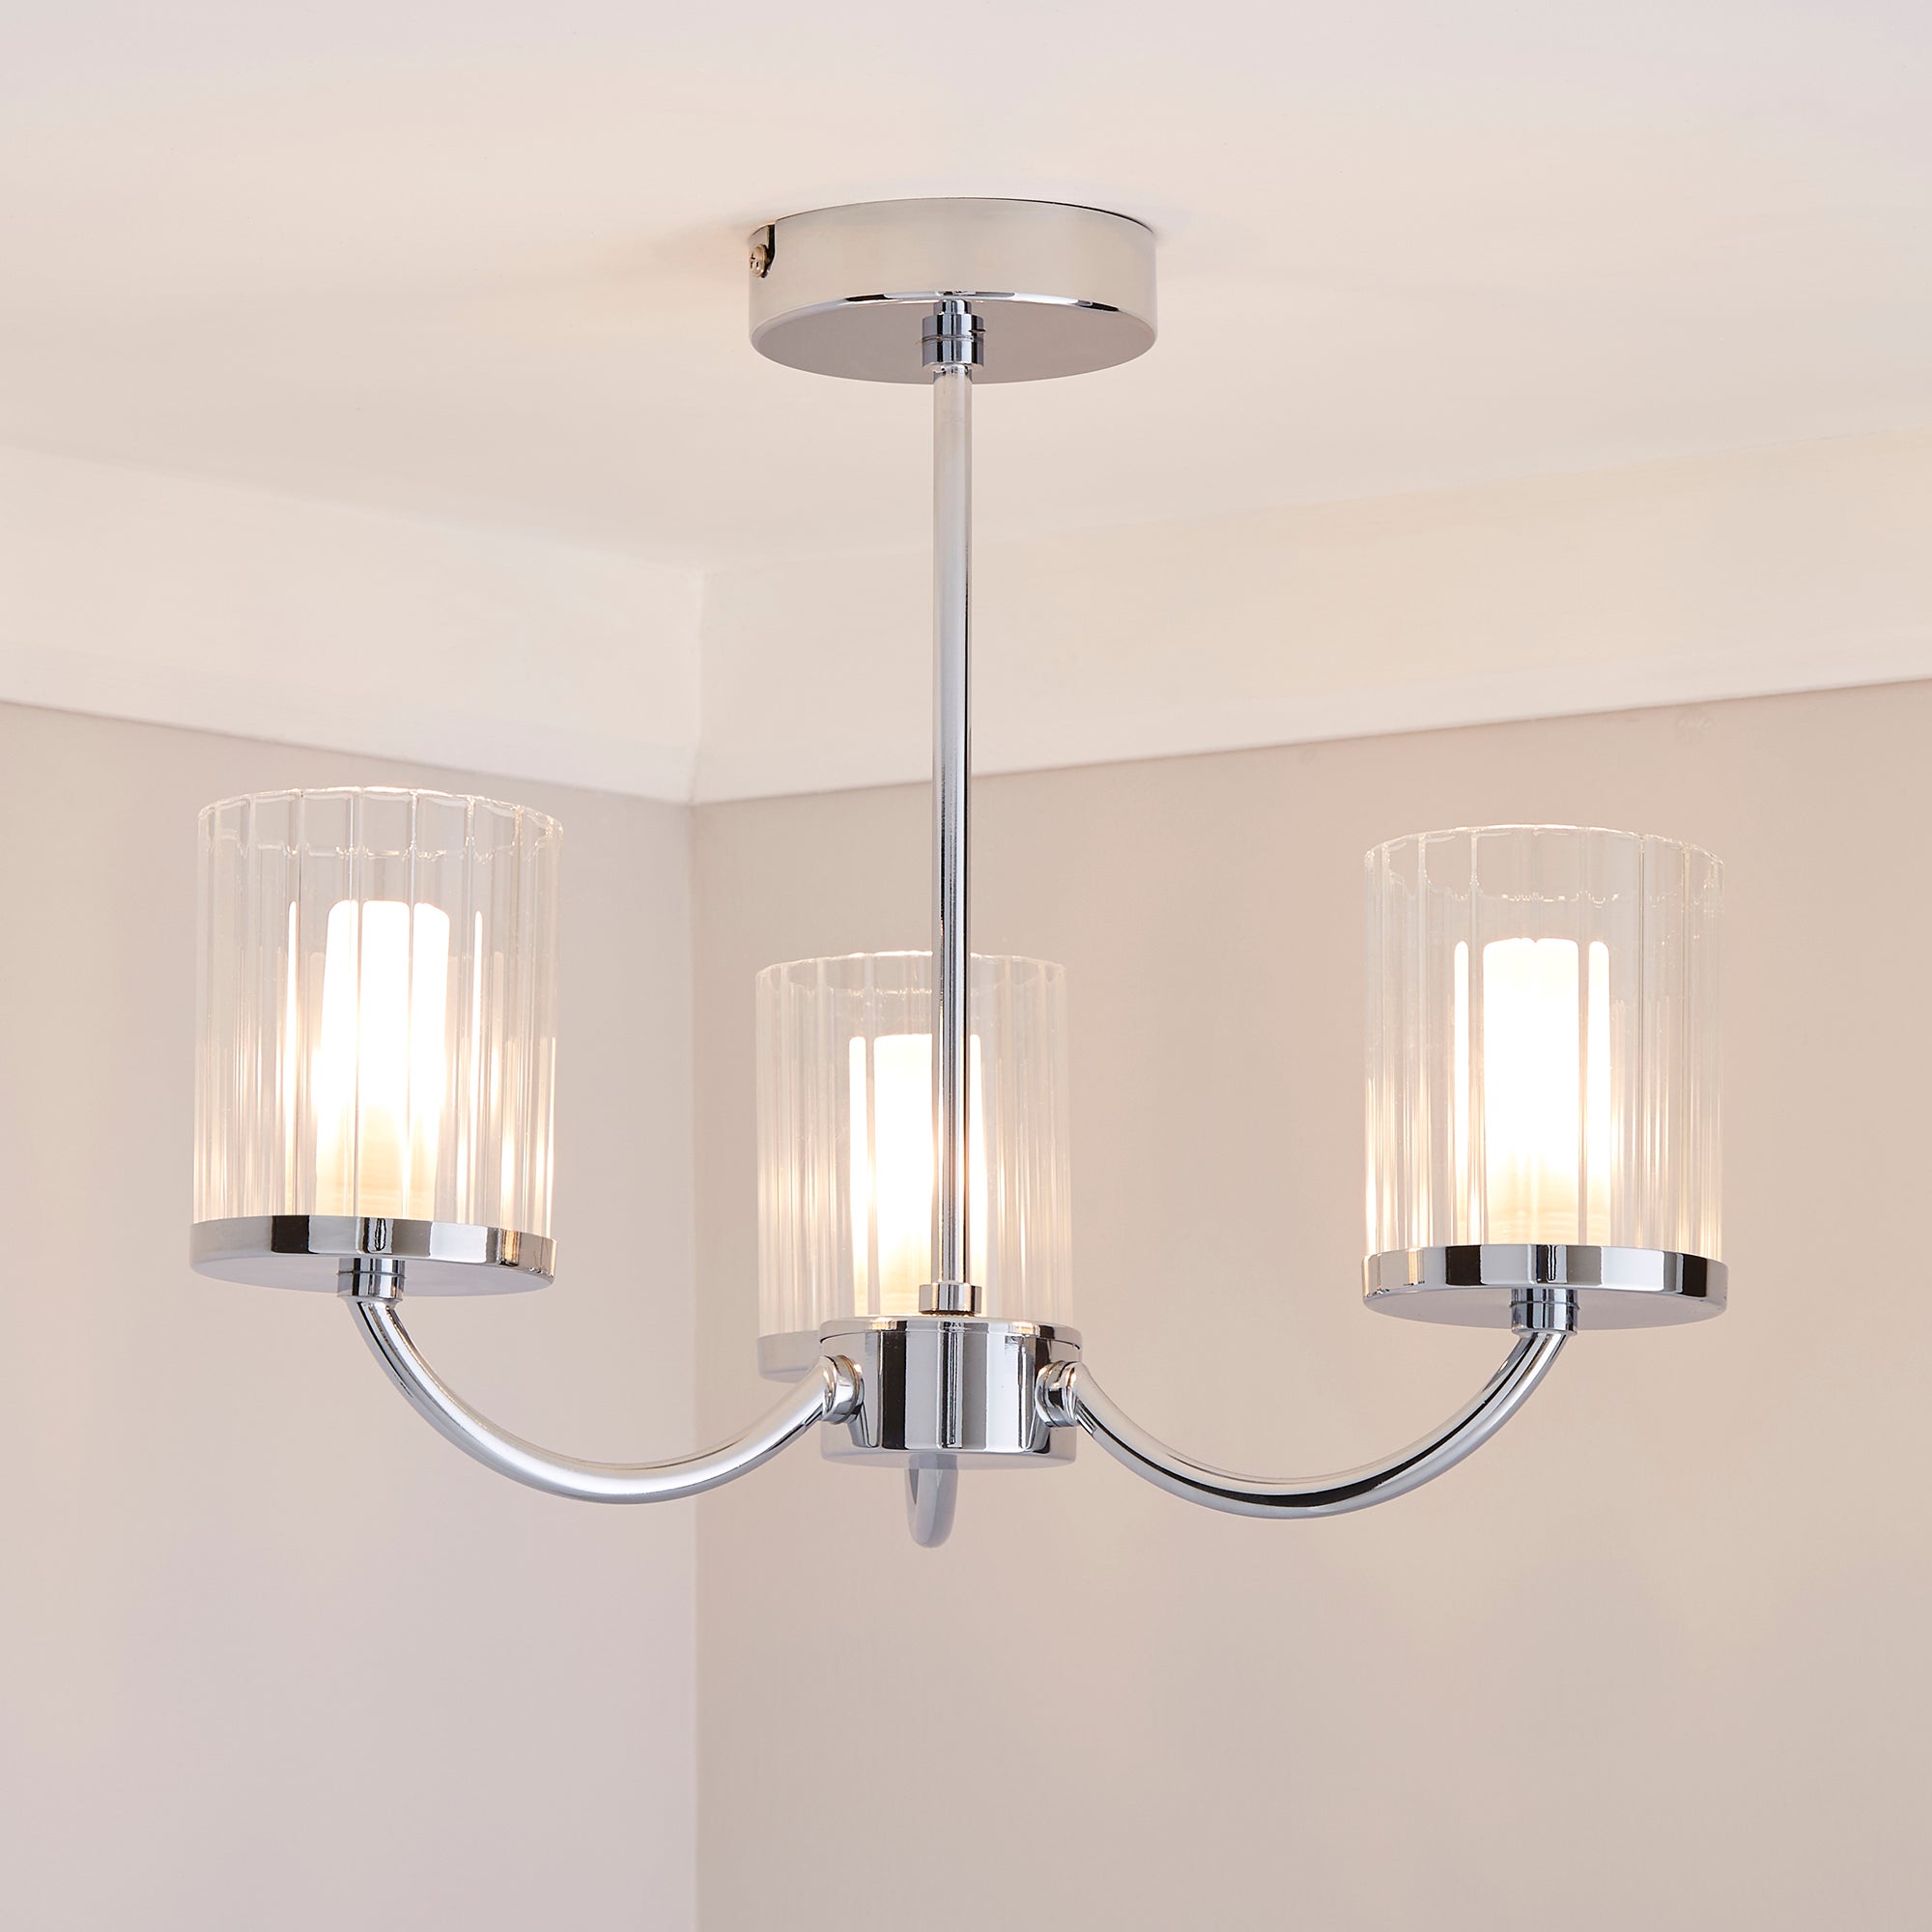 Mavia 3 Light Glass Bathroom Semi Flush Ceiling Light